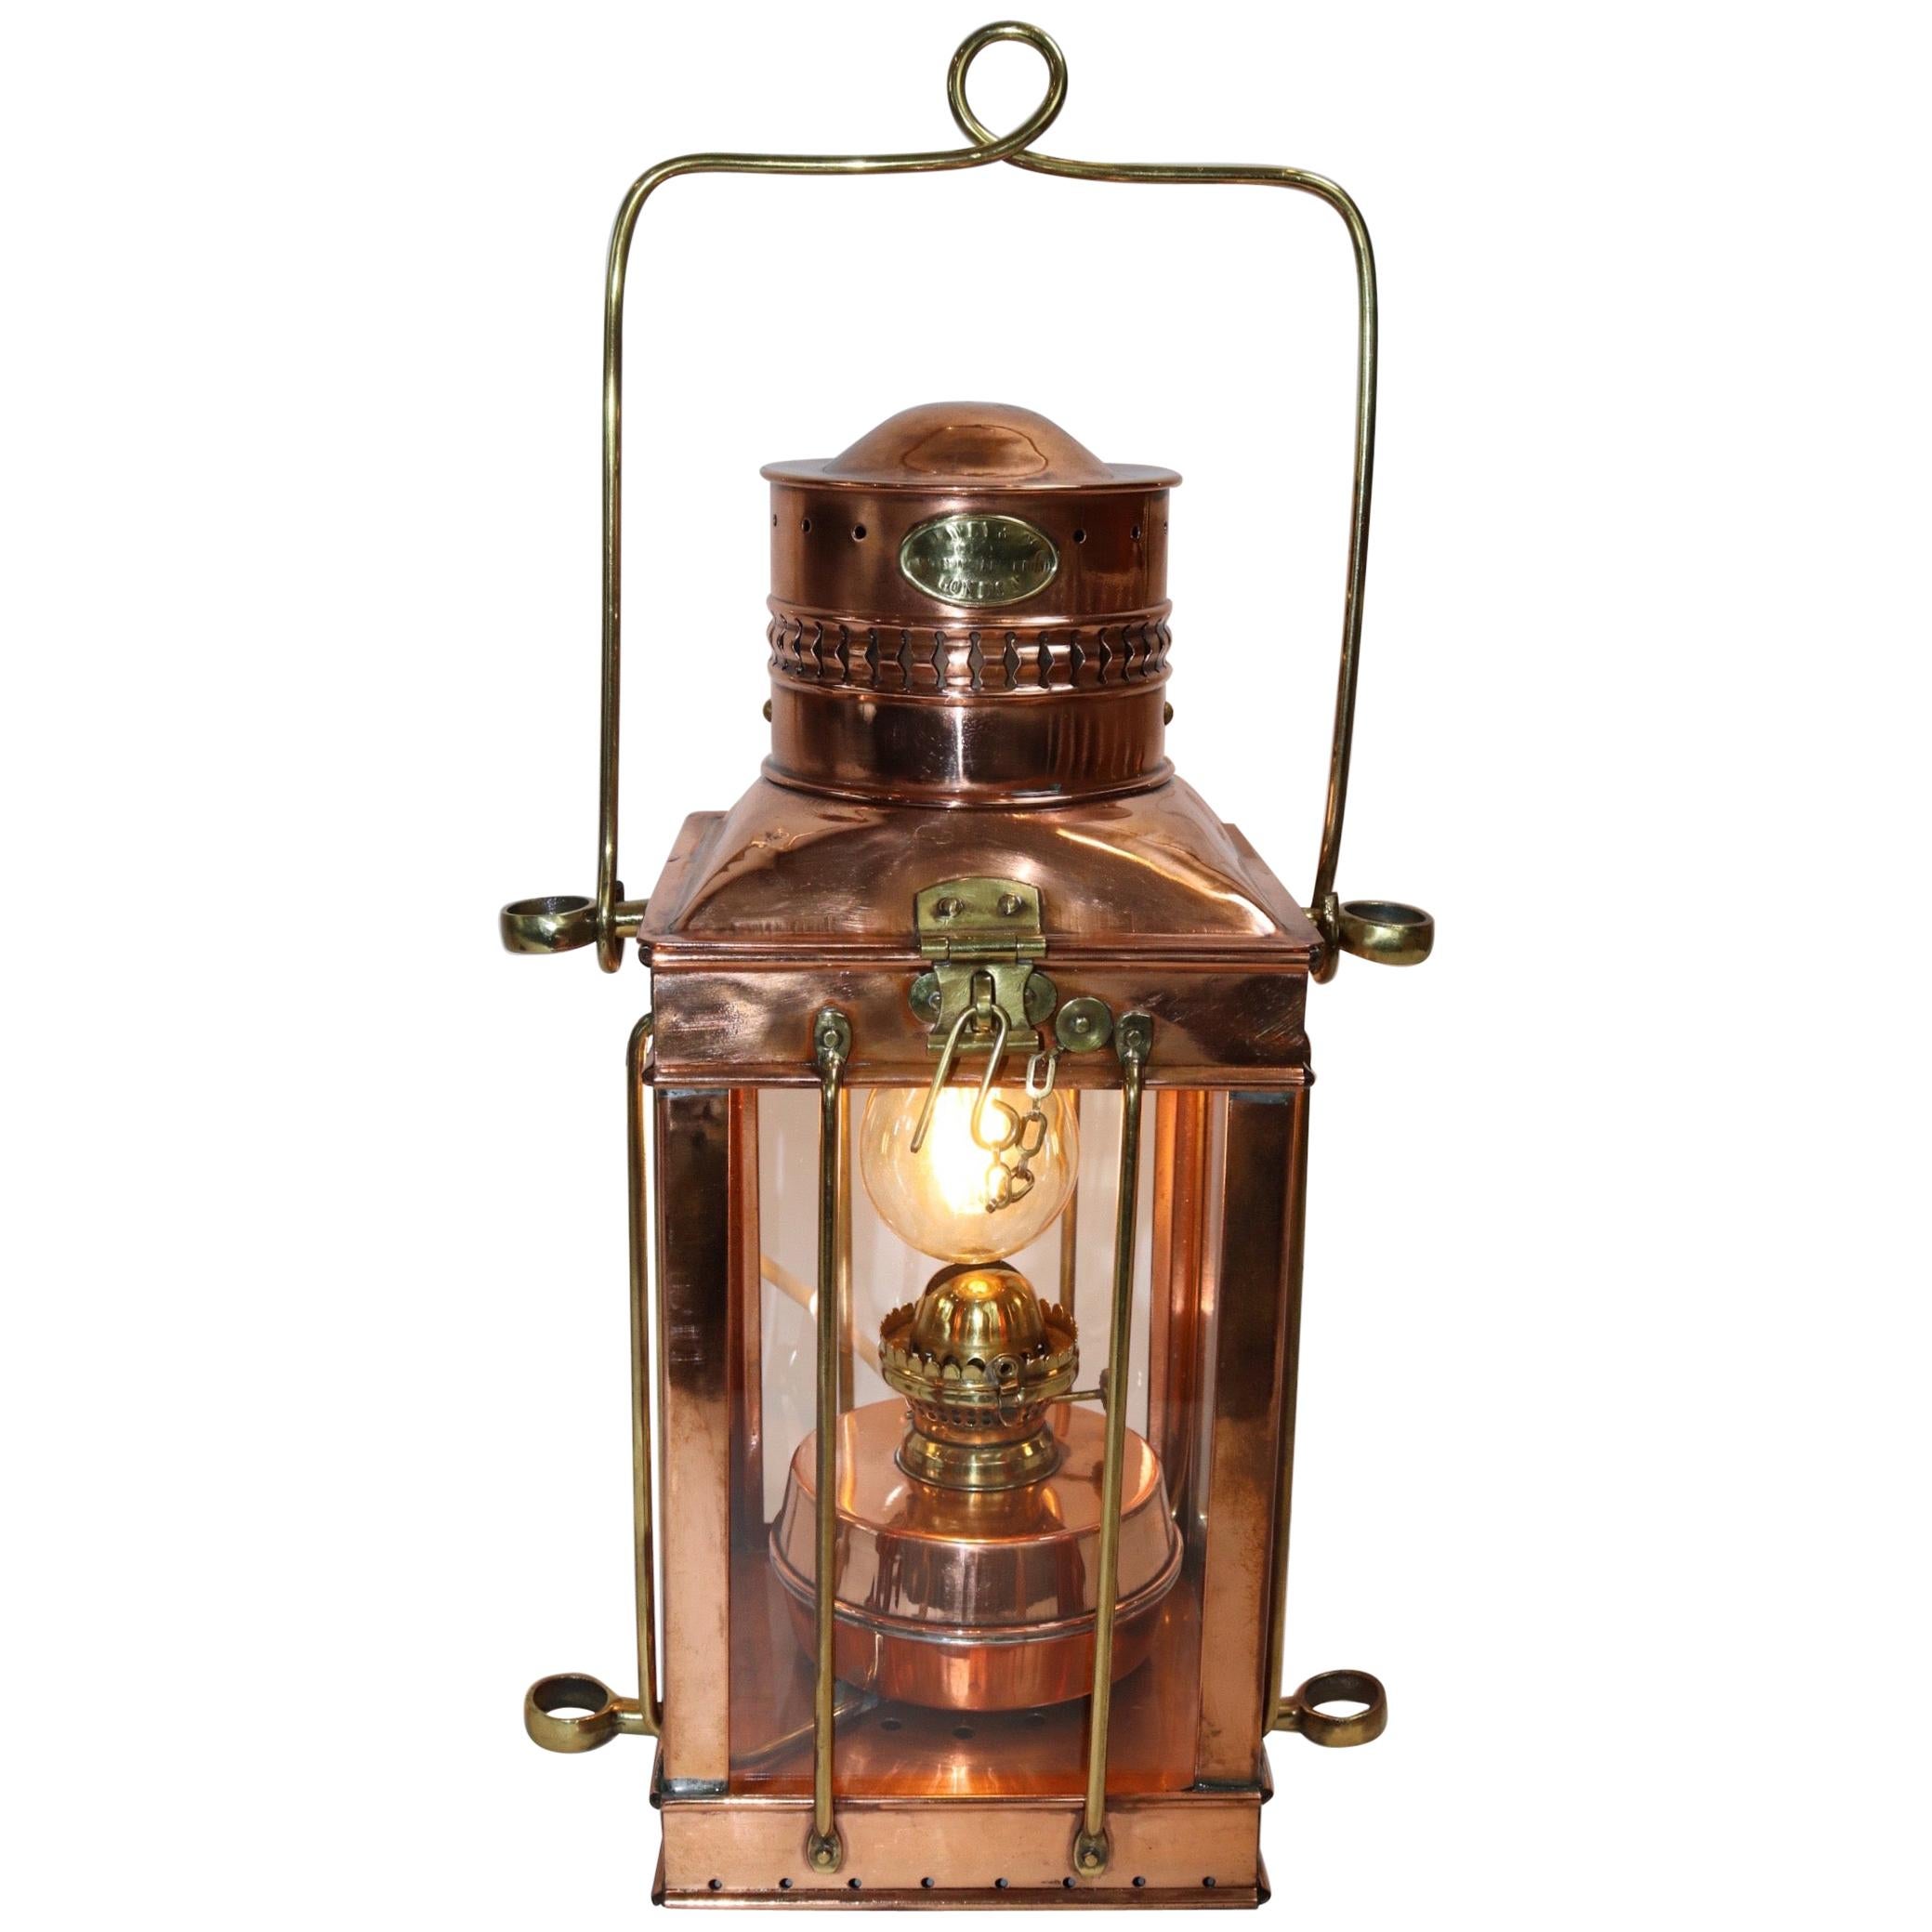 Copper Ships Cabin Lantern by Davey of London